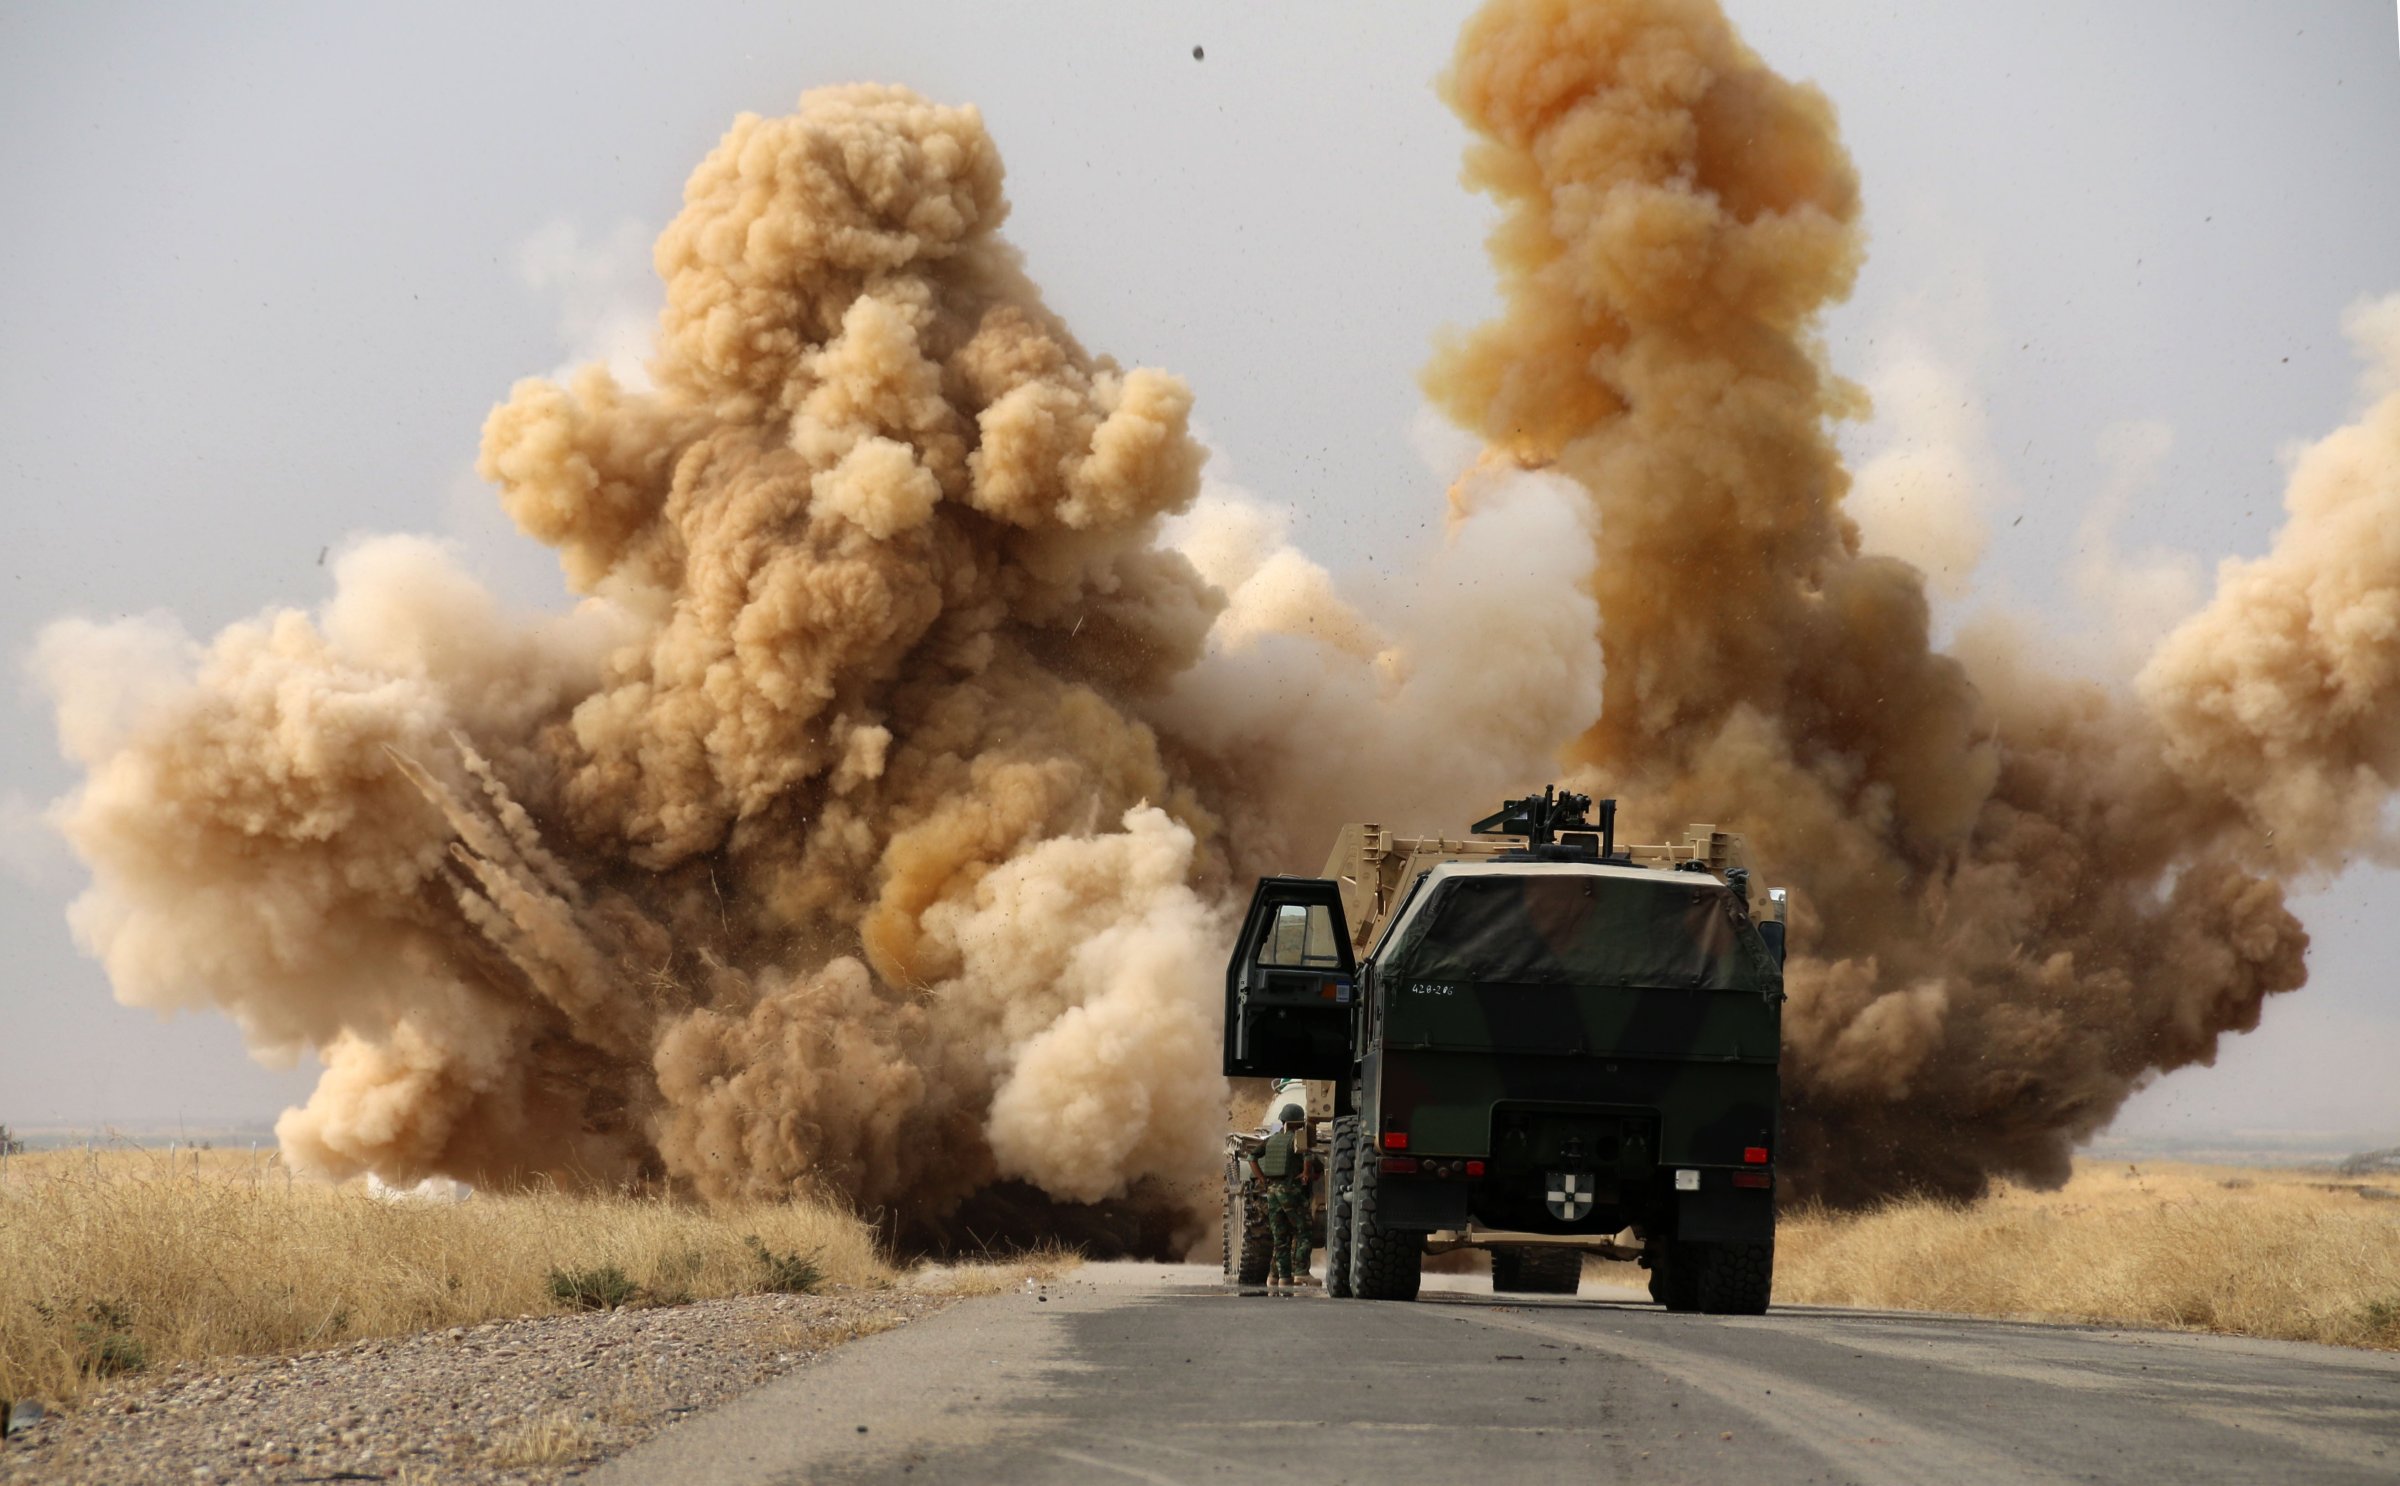 Iraqi Kurdish Peshmerga forces stage an operation against Daesh terrorists